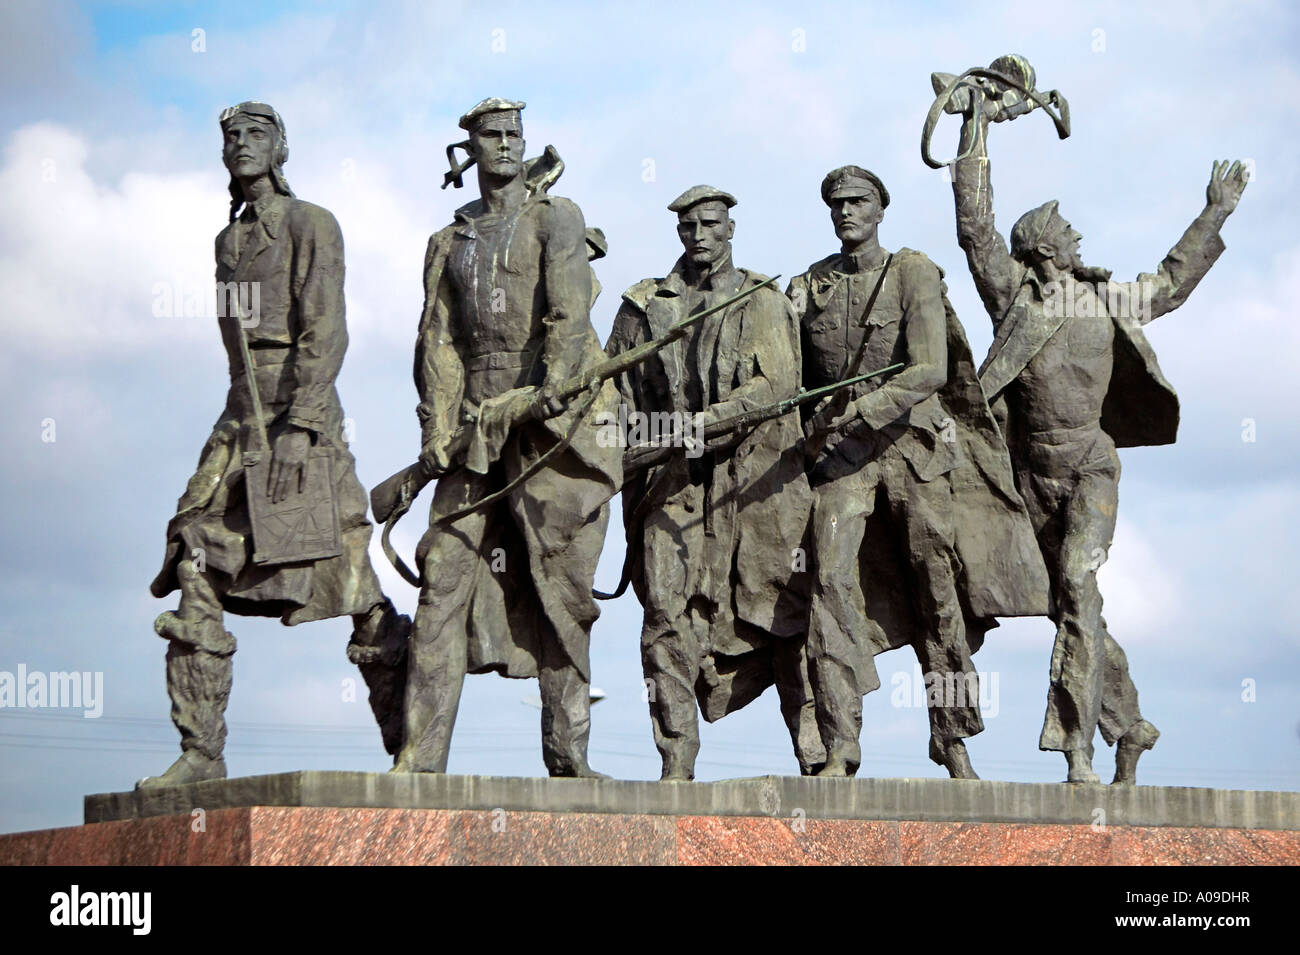 Sankt Petersburg, Denkmal fuer die Verteidiger Leningrads, San Pietroburgo monumento per il difensore di Leningrado in Russia Foto Stock